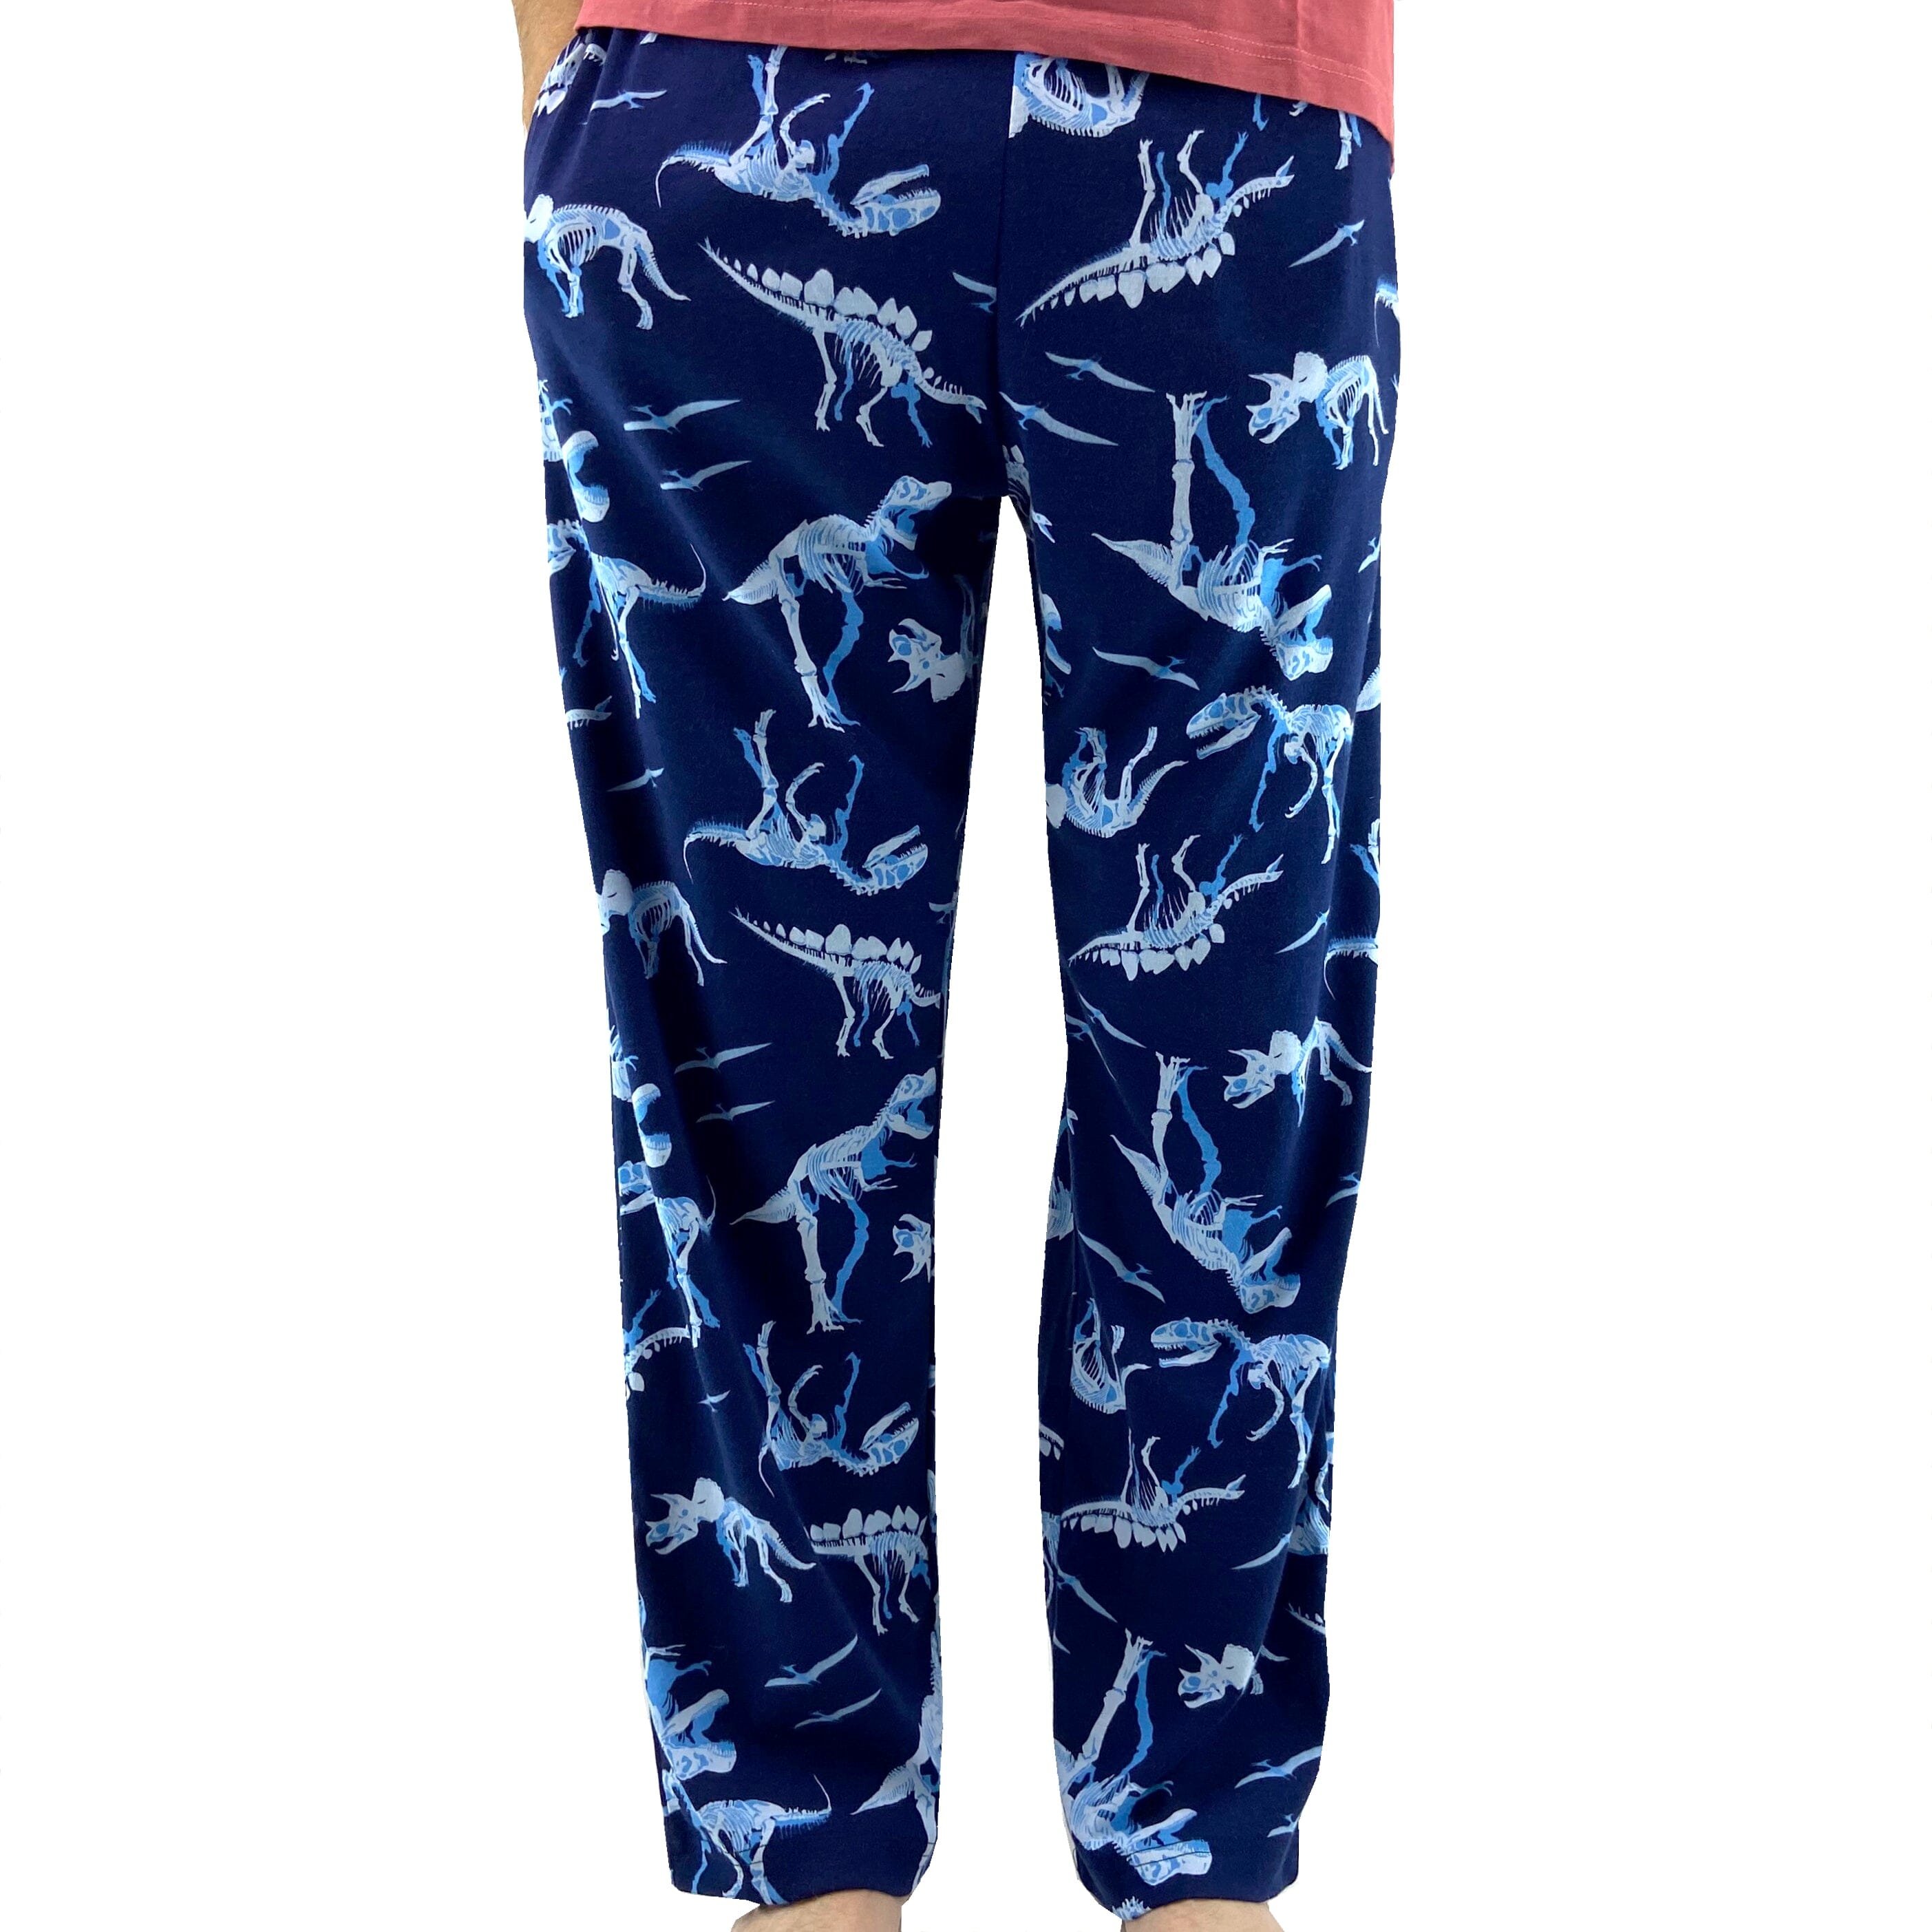 Men's Knit Pajama Pants